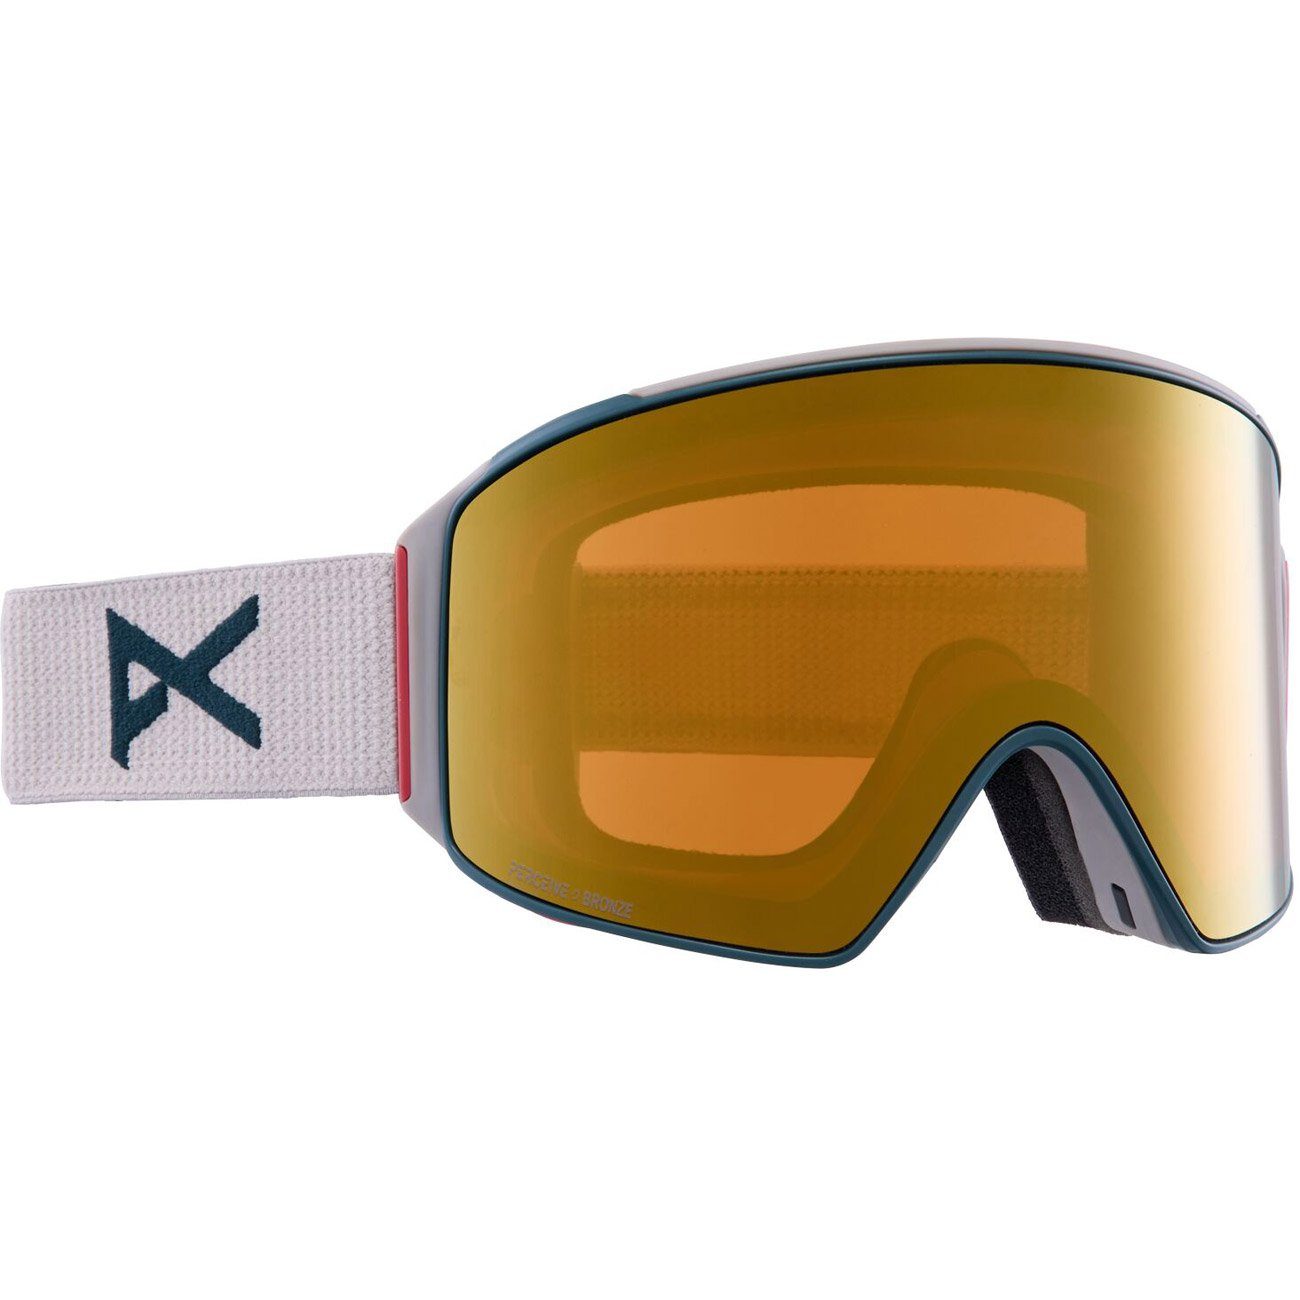 Anon Snowboardbrille, M4 CYLINDRICAL wrmgry/prcv sun brnz